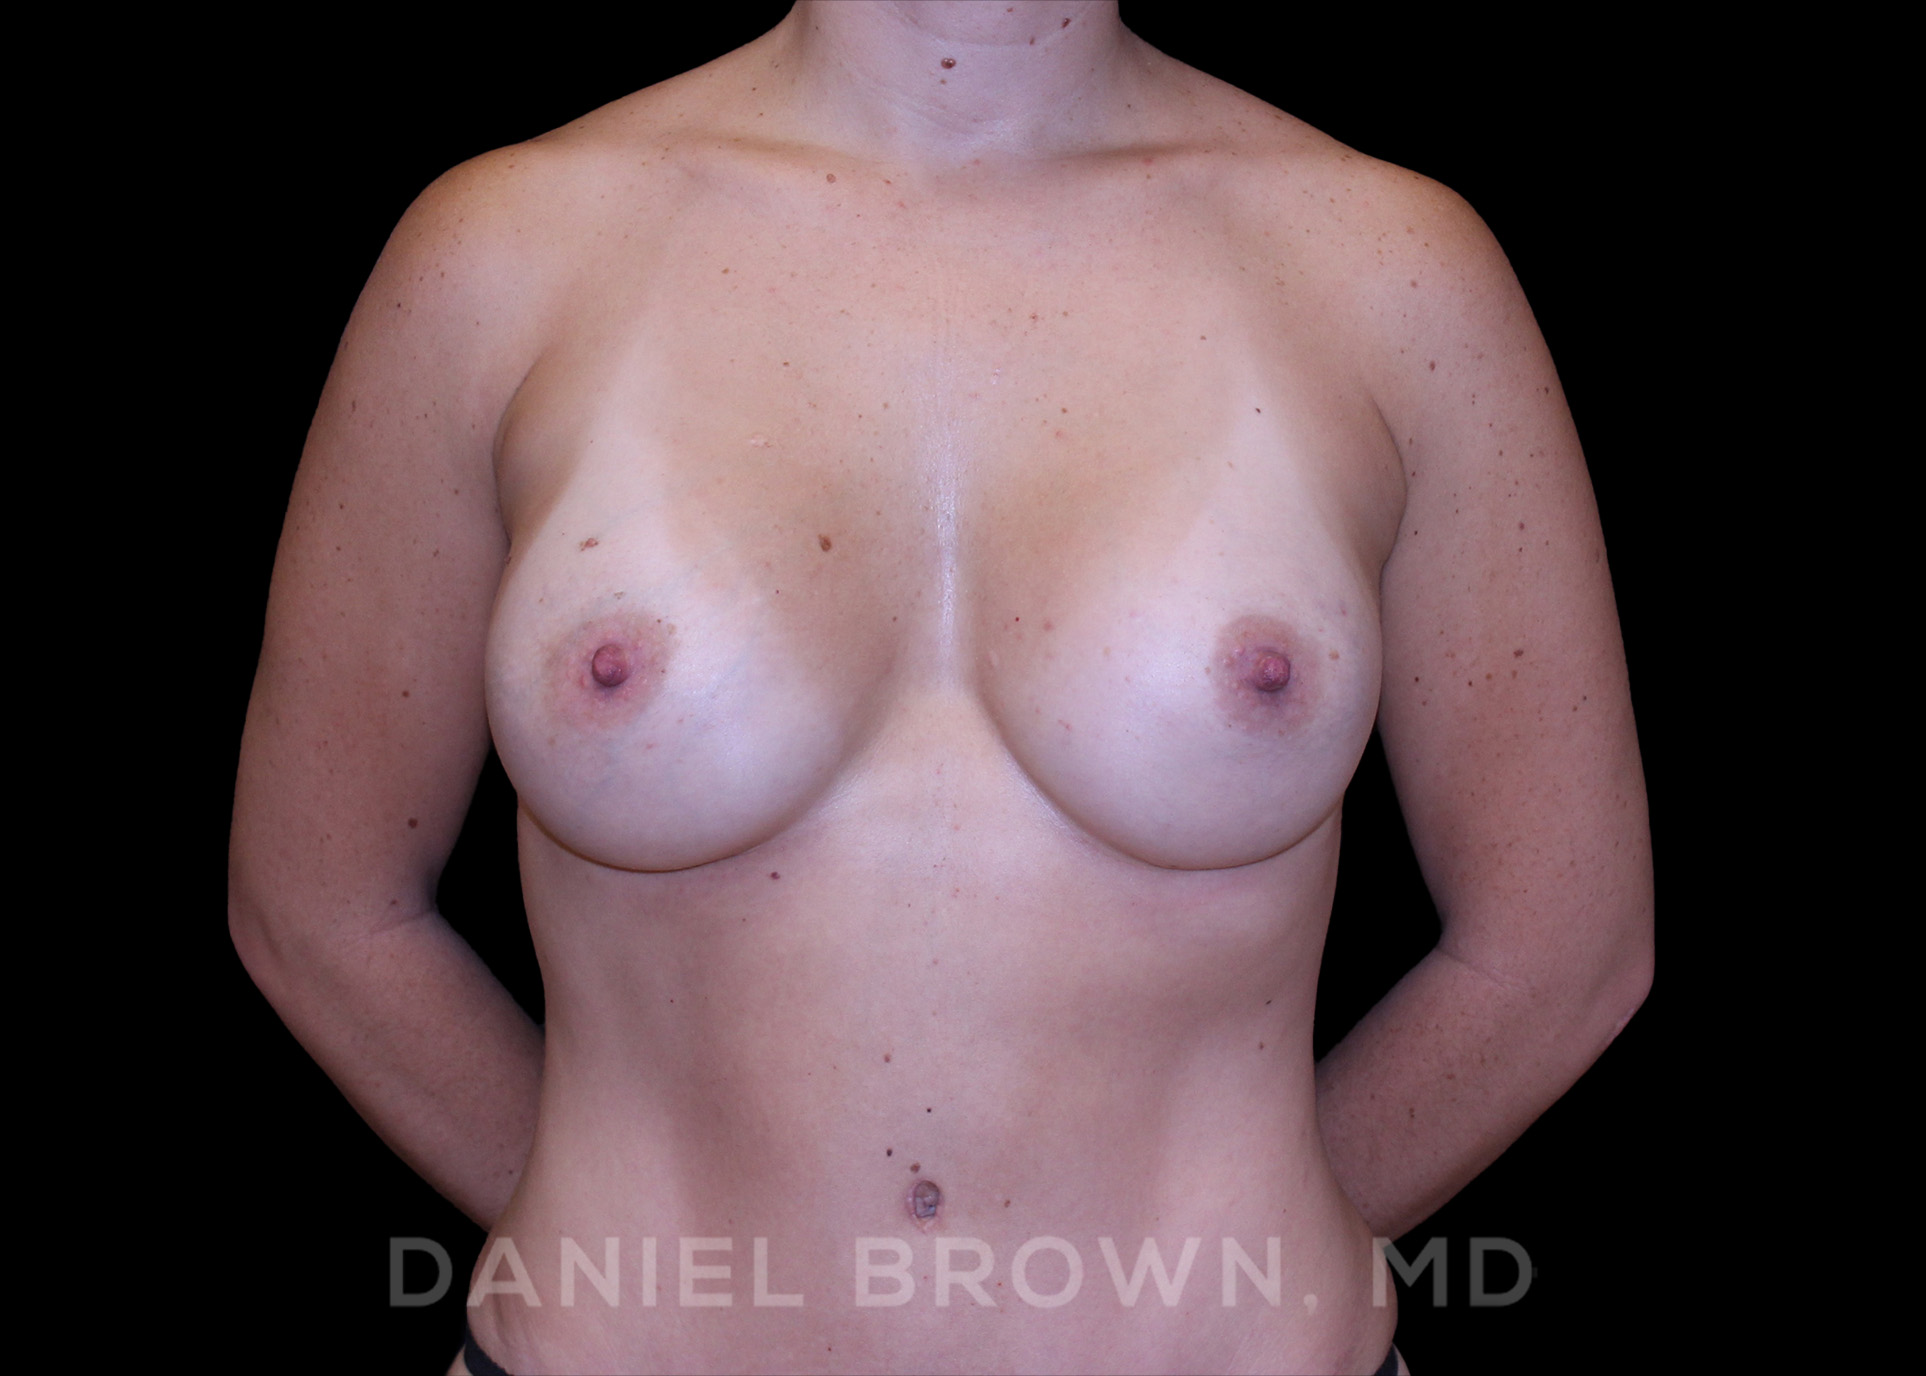 Breast Augmentation Patient Photo - Case 2327 - after view